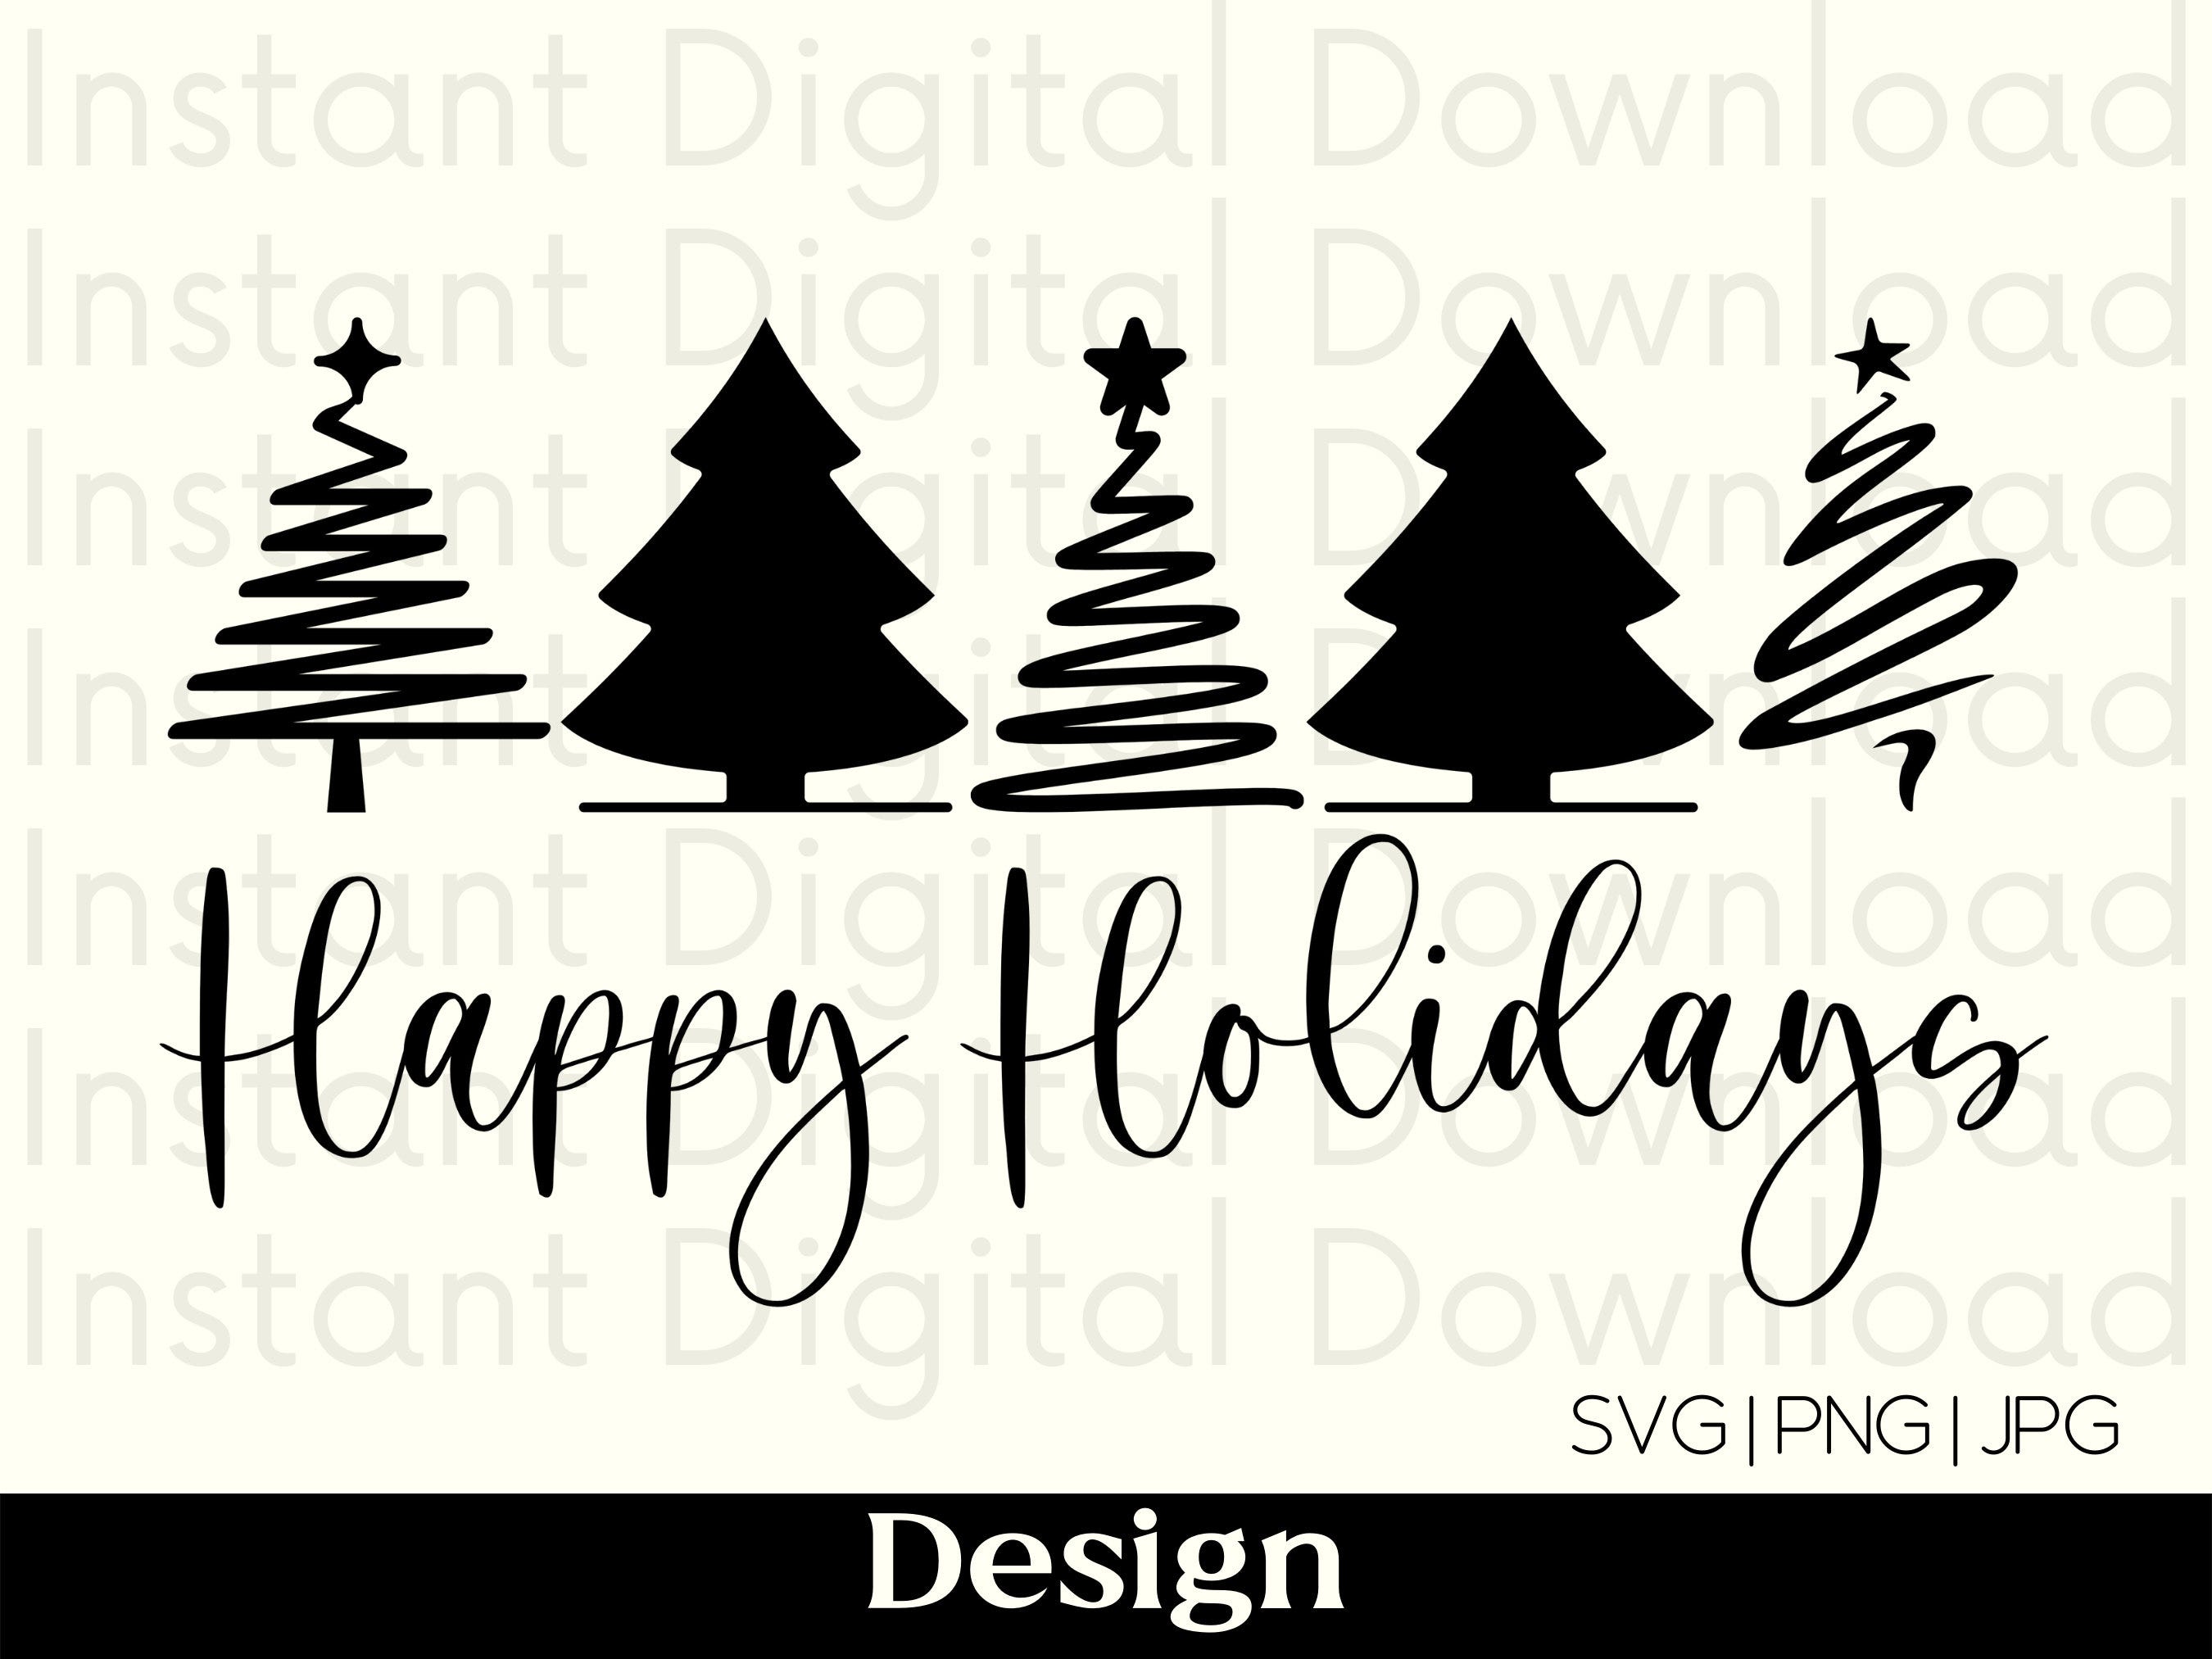 Happy Holidays | Happy Holidays SVG | Merry Christmas SVG | Christmas SVG | Happy Holidays Ornament | Happy Holidays Shirt | Christmas Gift